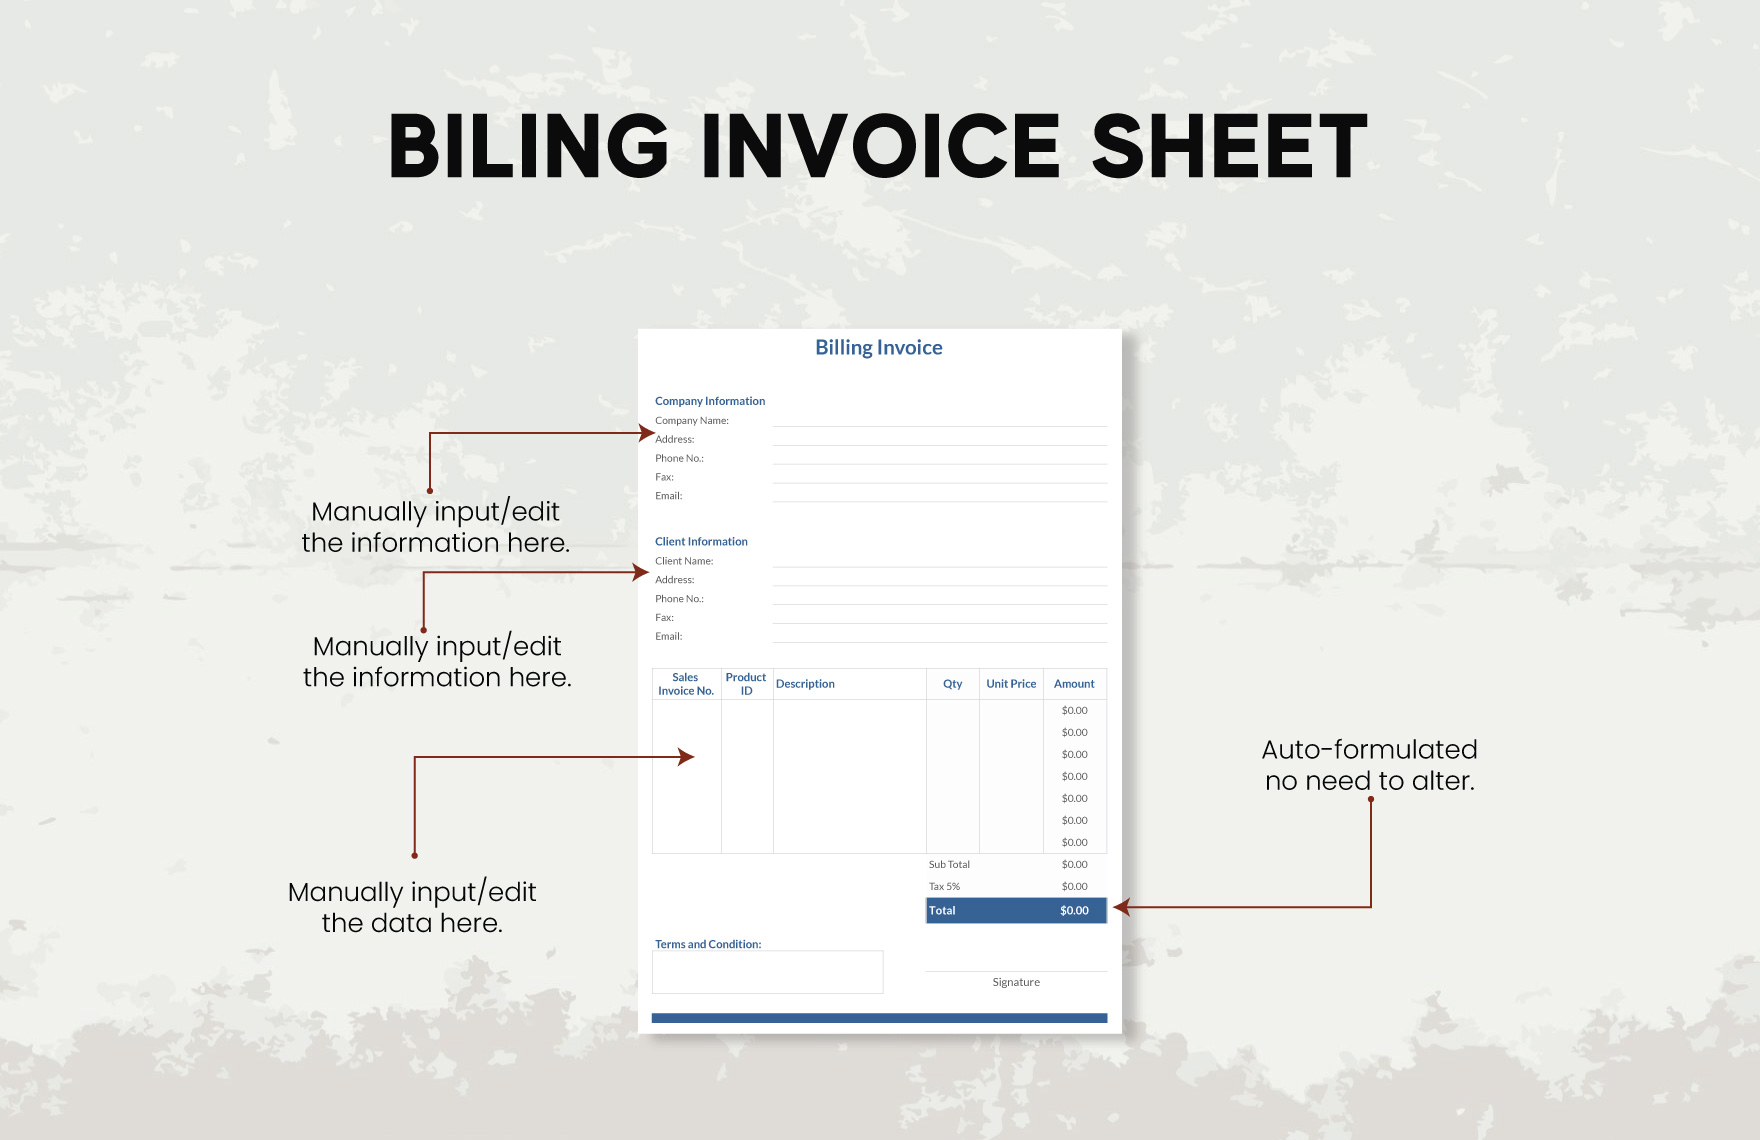 Billing Invoice Sheet Template